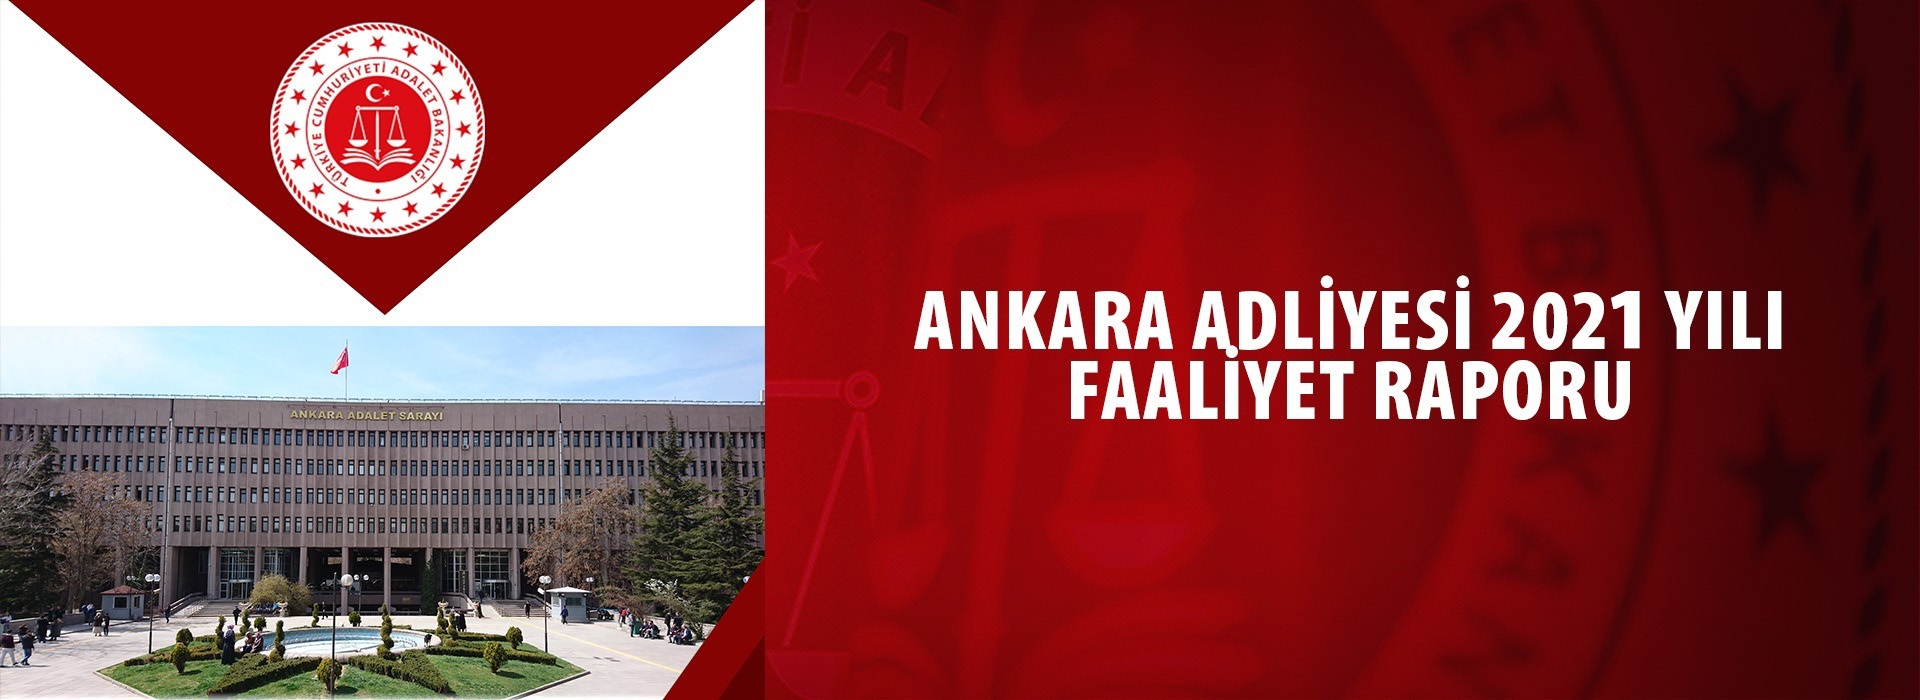 Ankara Adliyesi 2021 Yılı Faaliyet Raporu